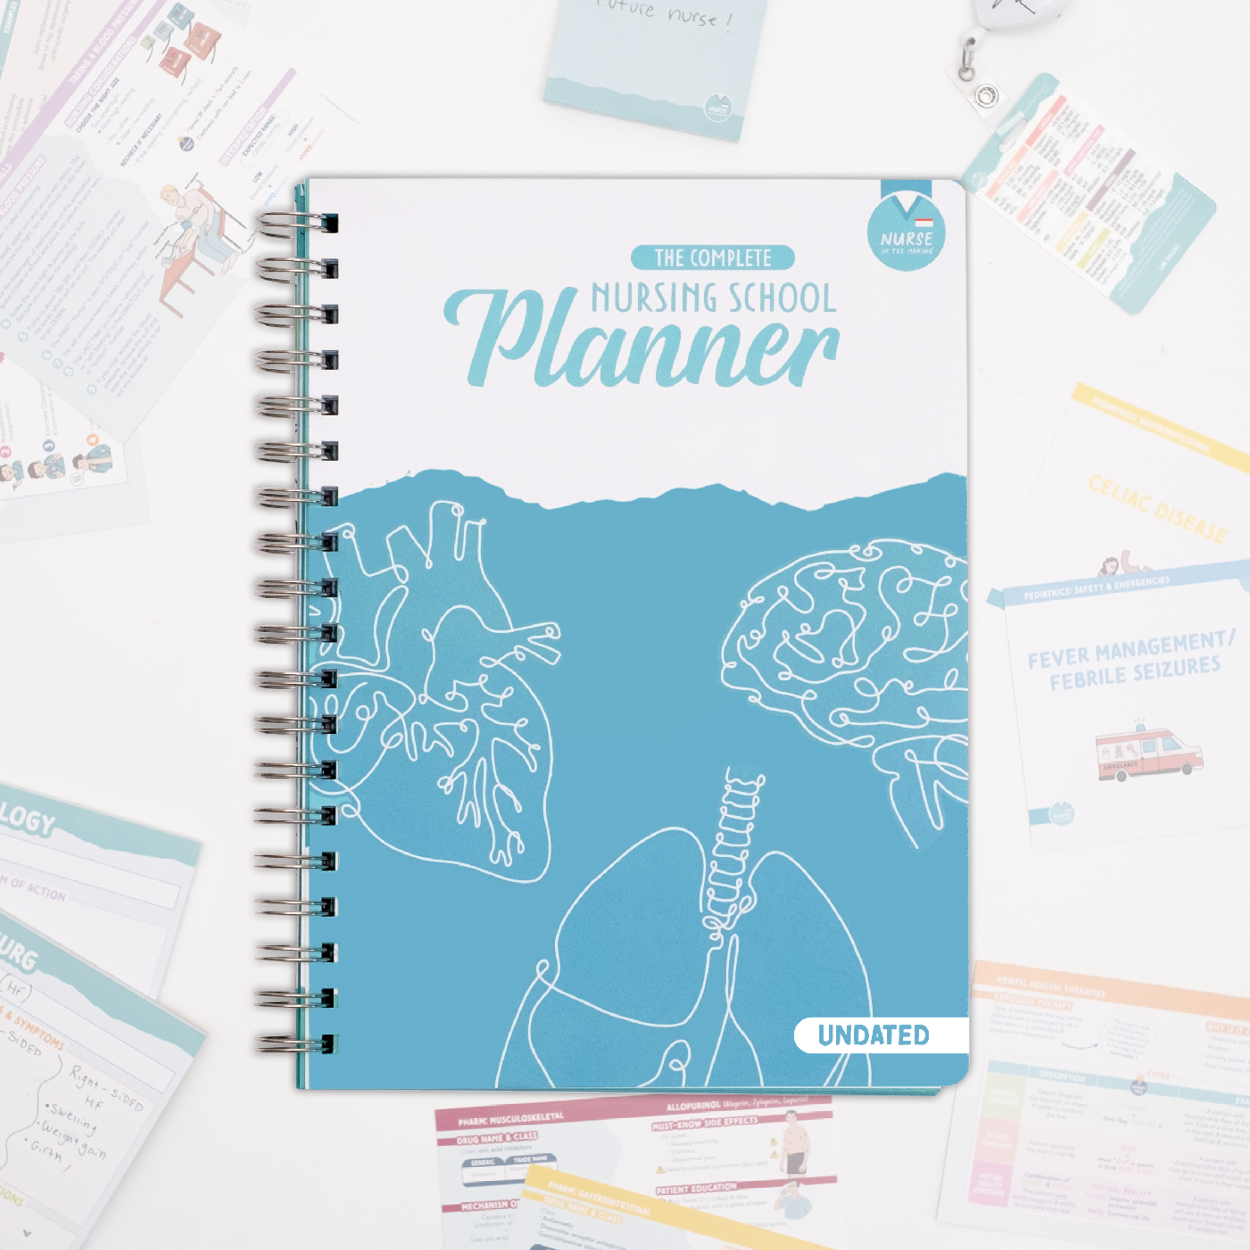 The Complete Nursing School Planner